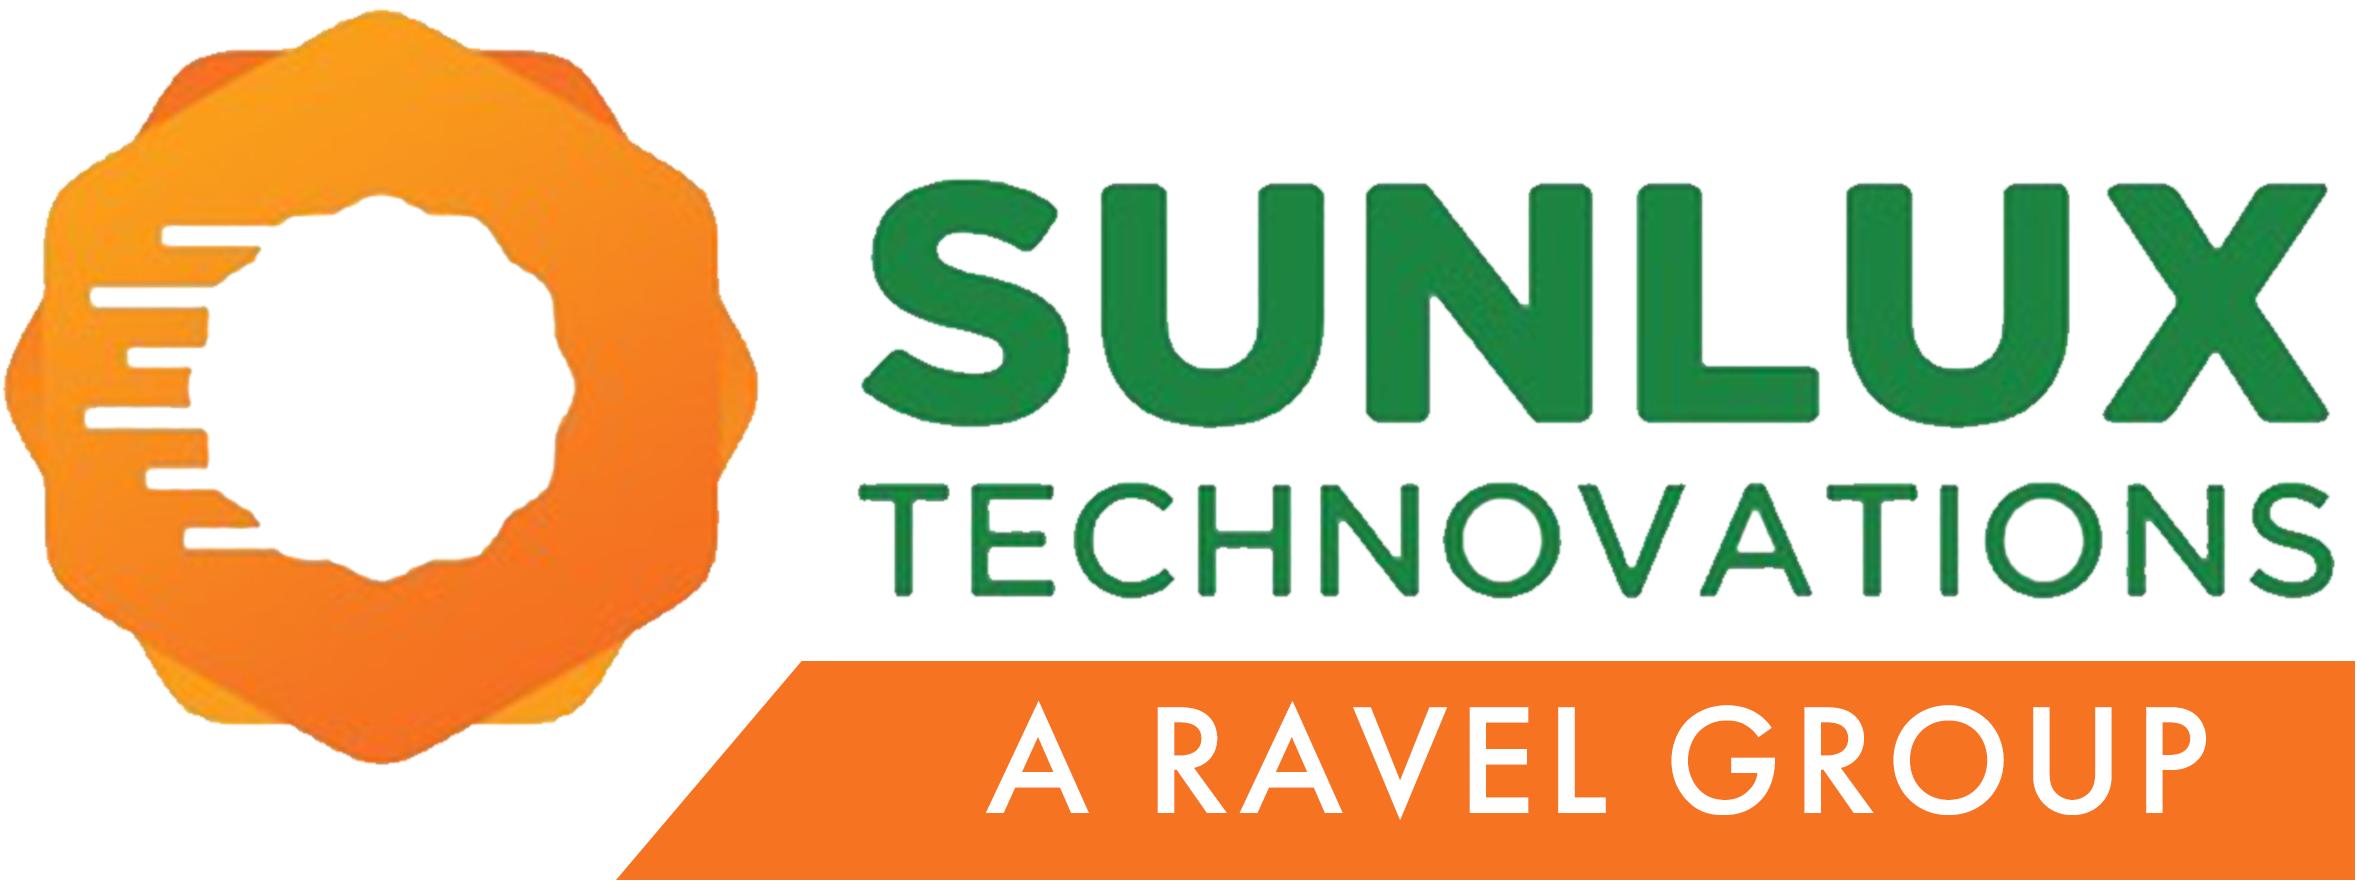 Sunlux Technovations